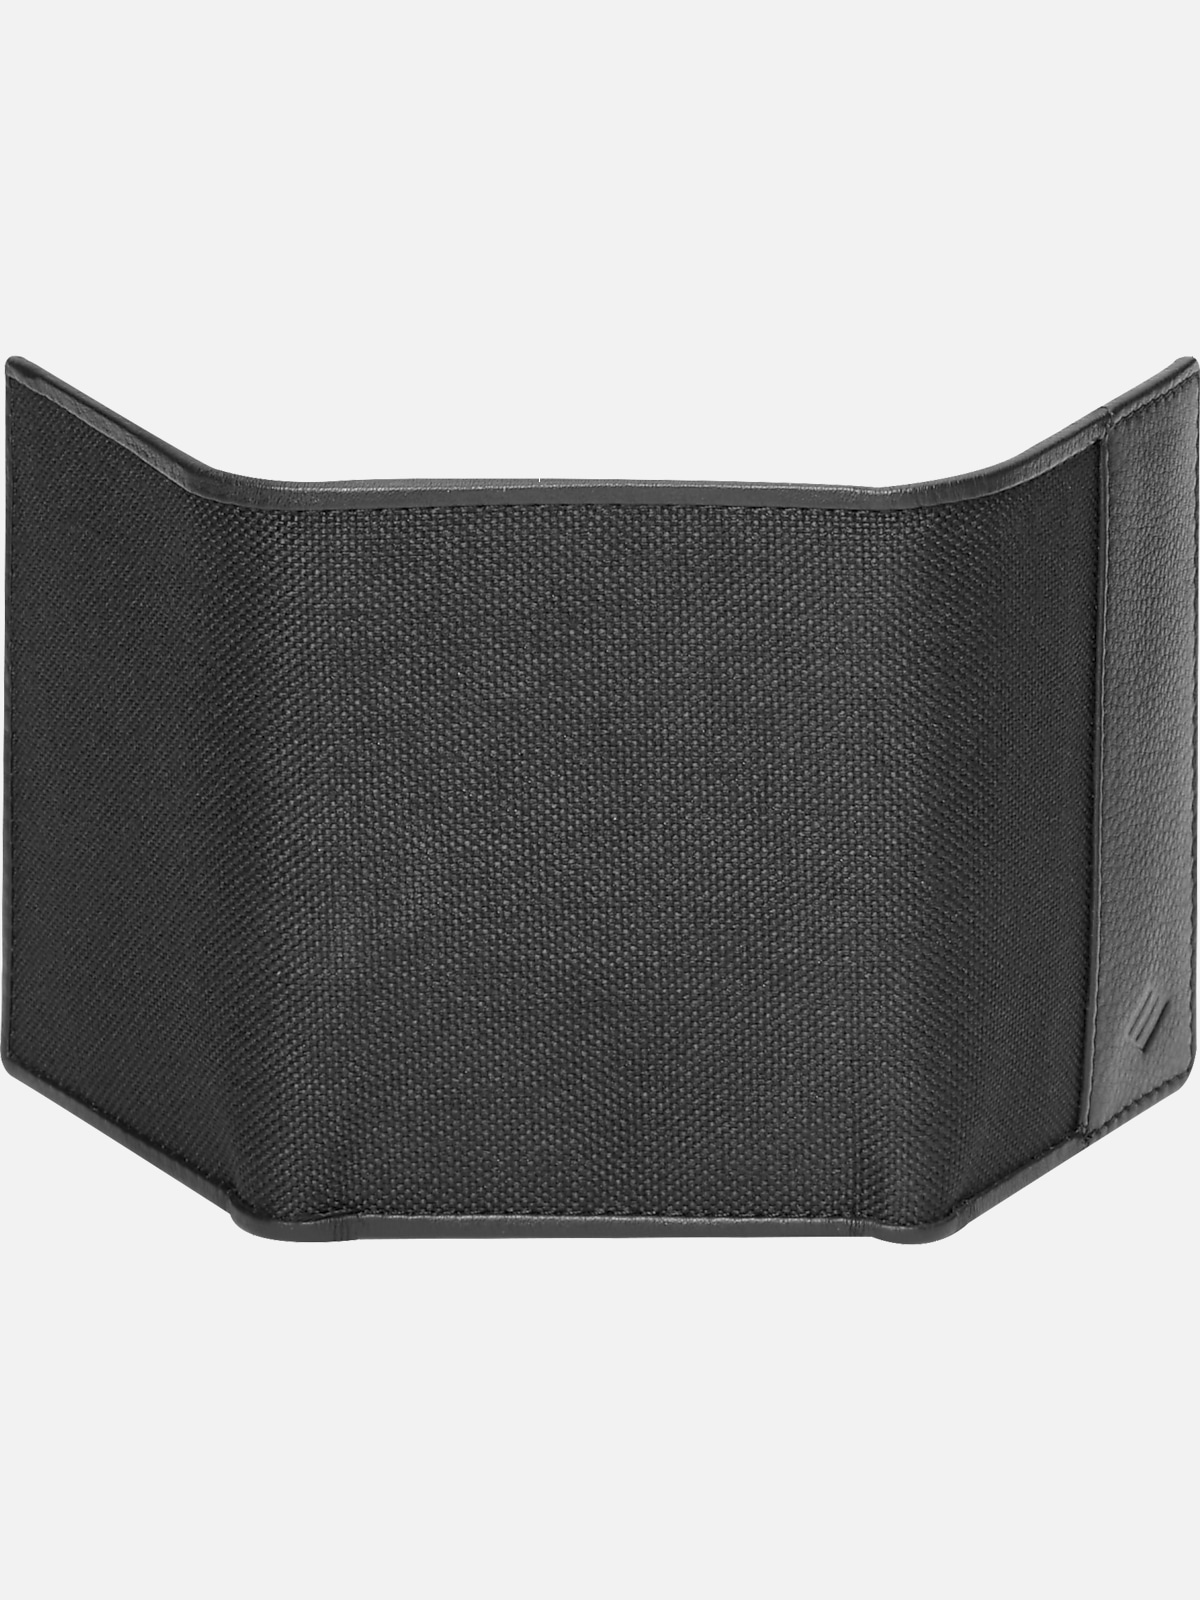 Joseph Abboud Leather Accent Tri-Fold Wallet | Wallets| Men's Wearhouse